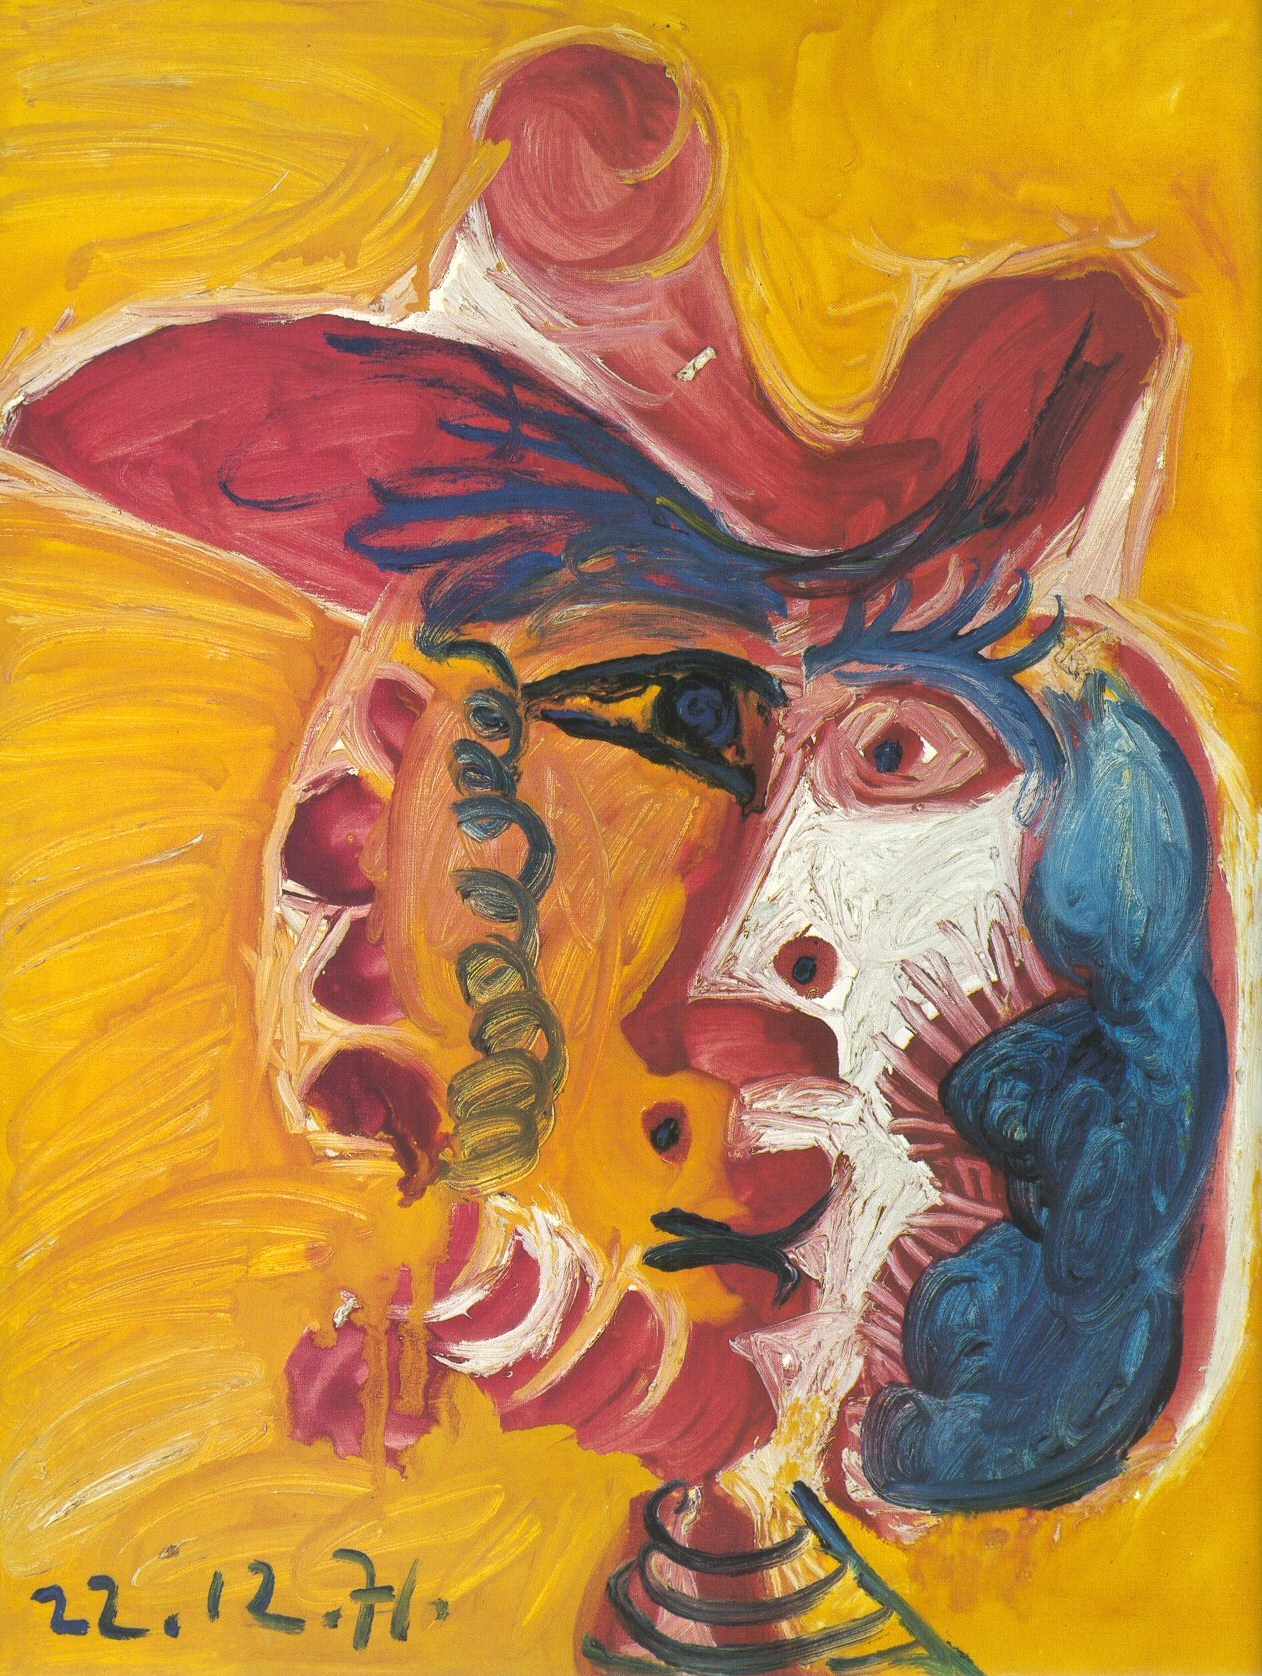 Пабло Пикассо. "Голова мужчины". 22.12.1971.